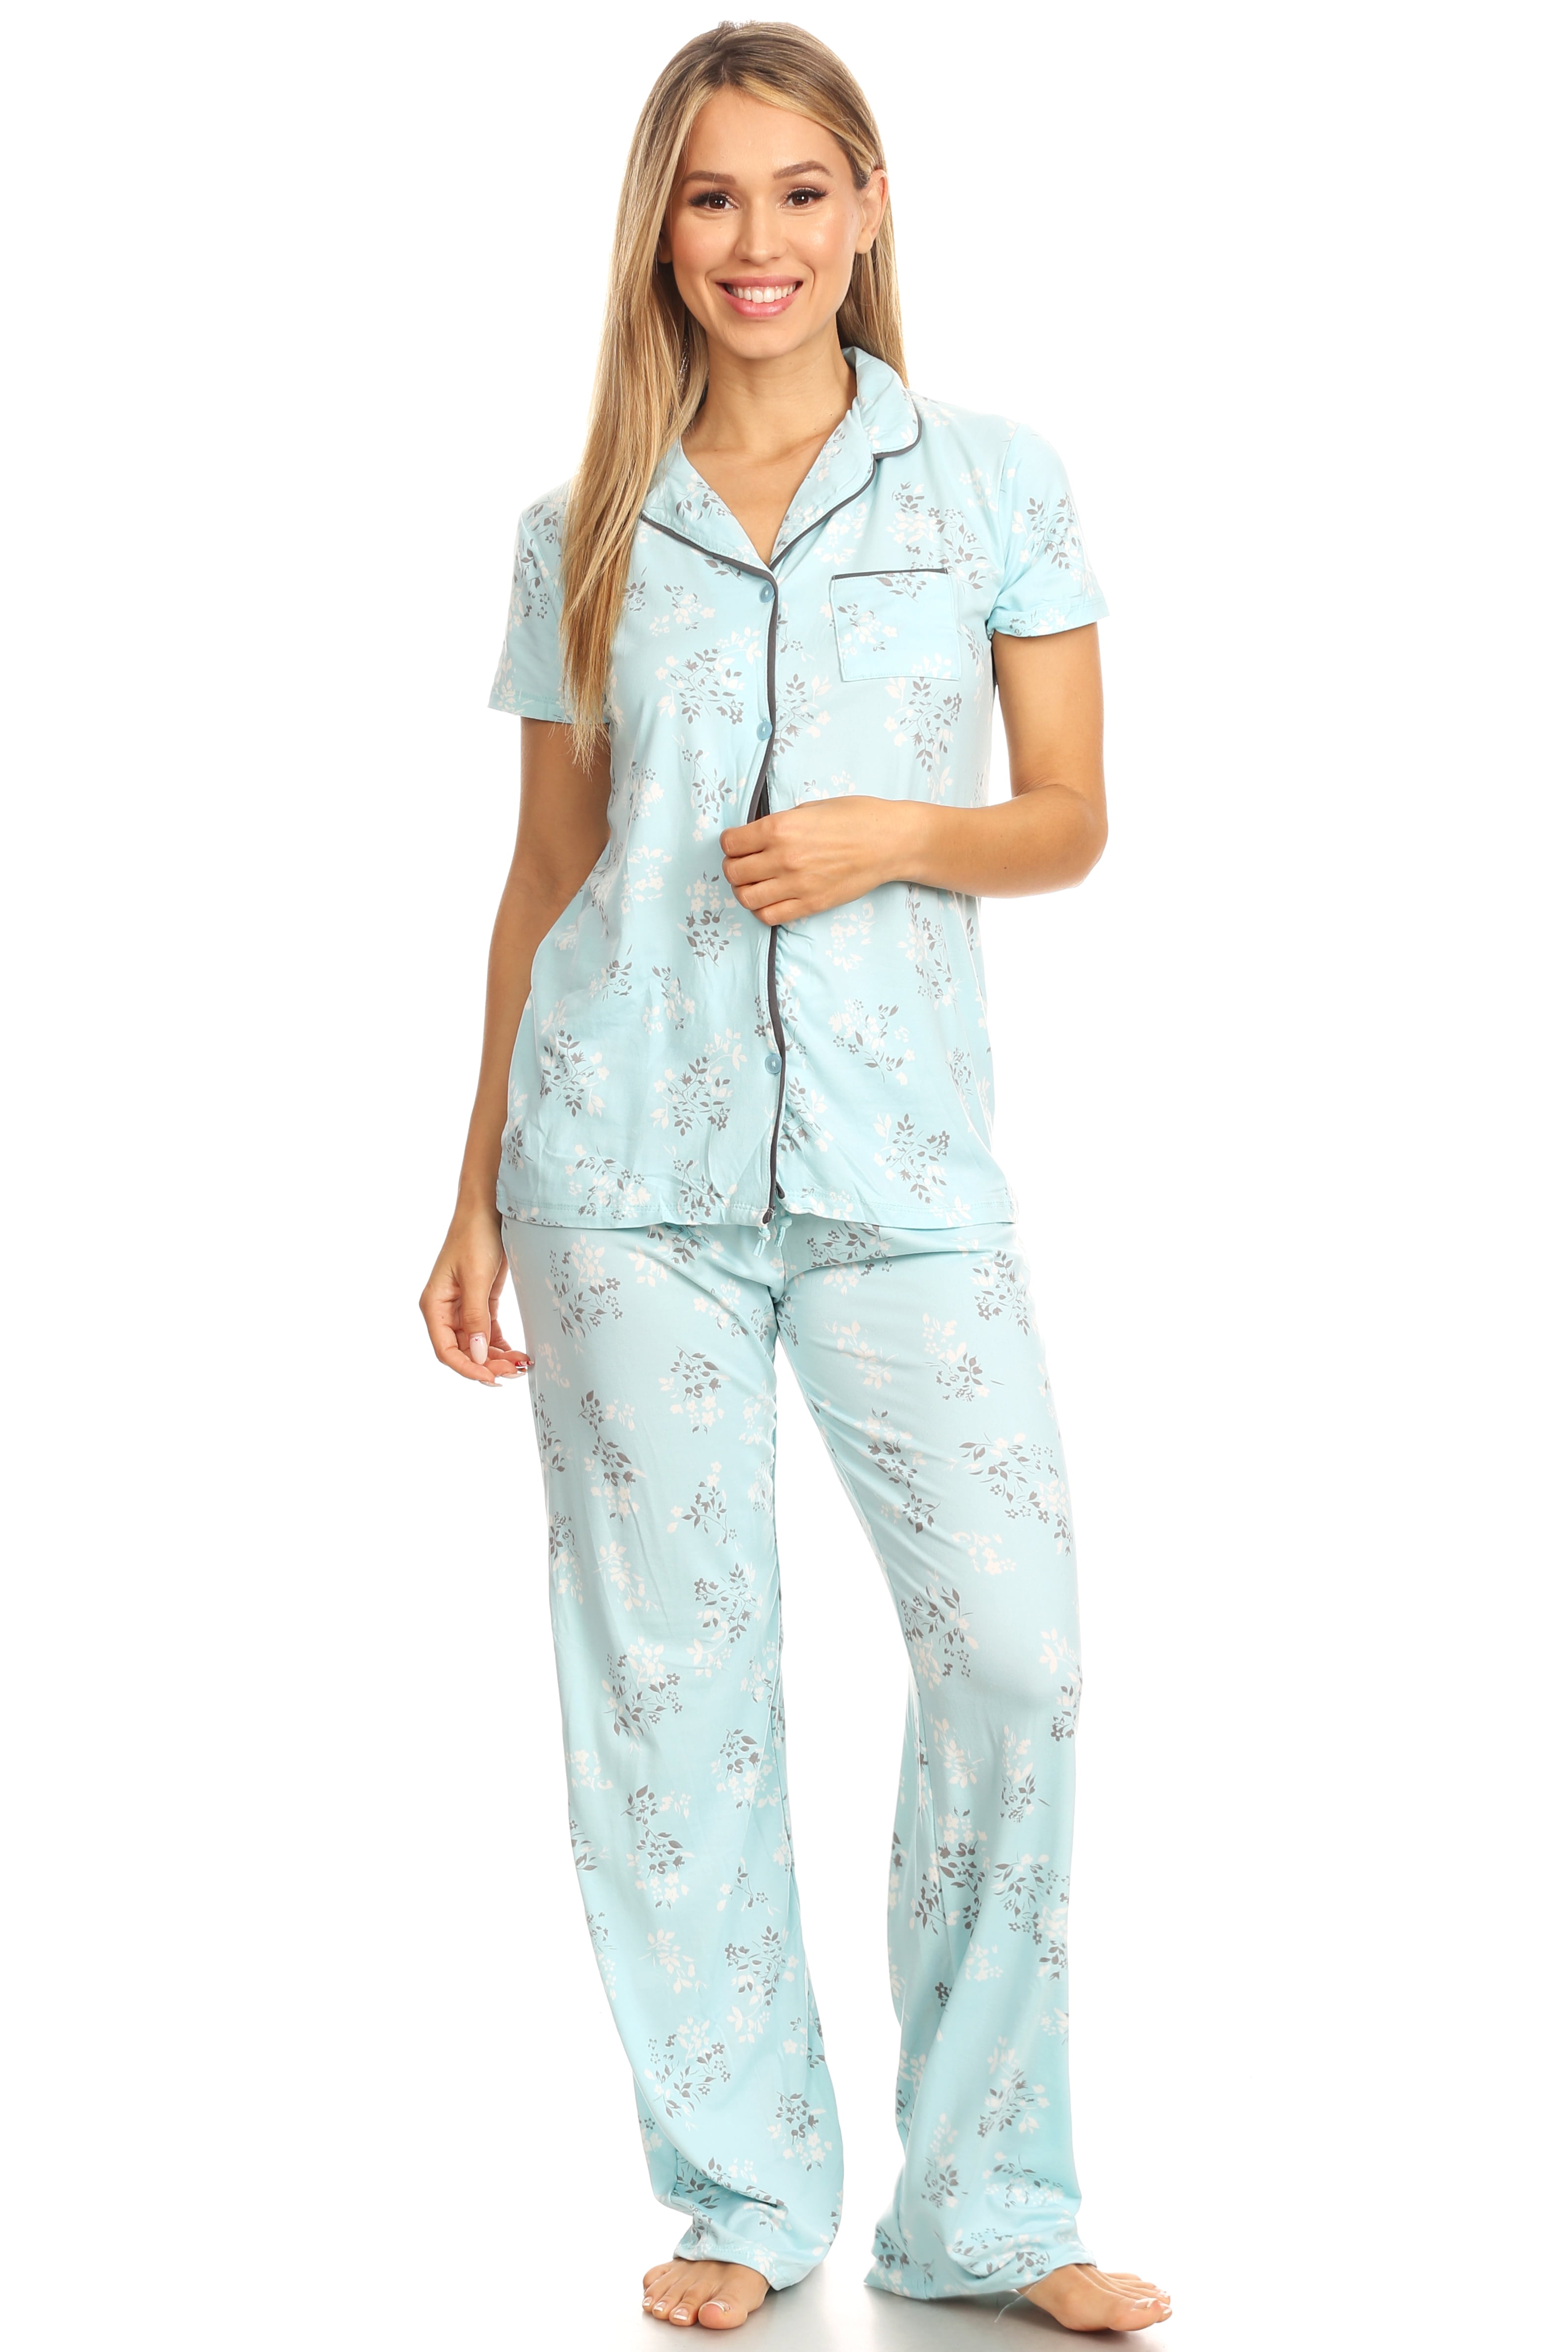 Fashion Brands Group Womens Sleepwear Pajamas Set Woman